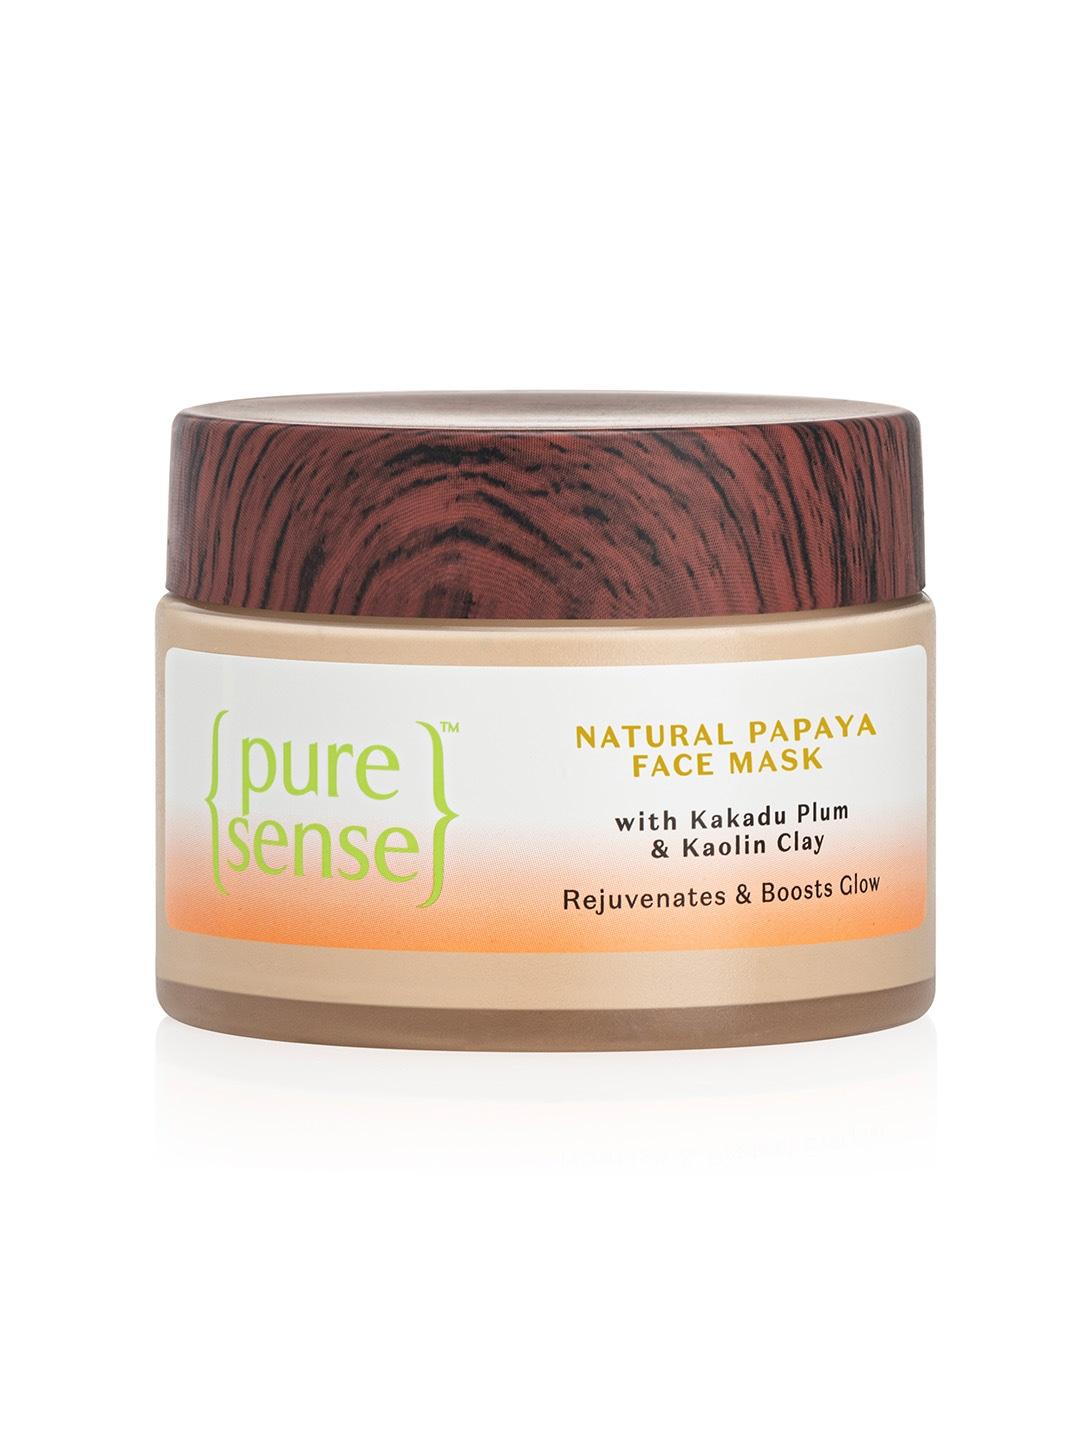 pure sense natural papaya face mask with kakadu plum & kaolin clay - 65 gm